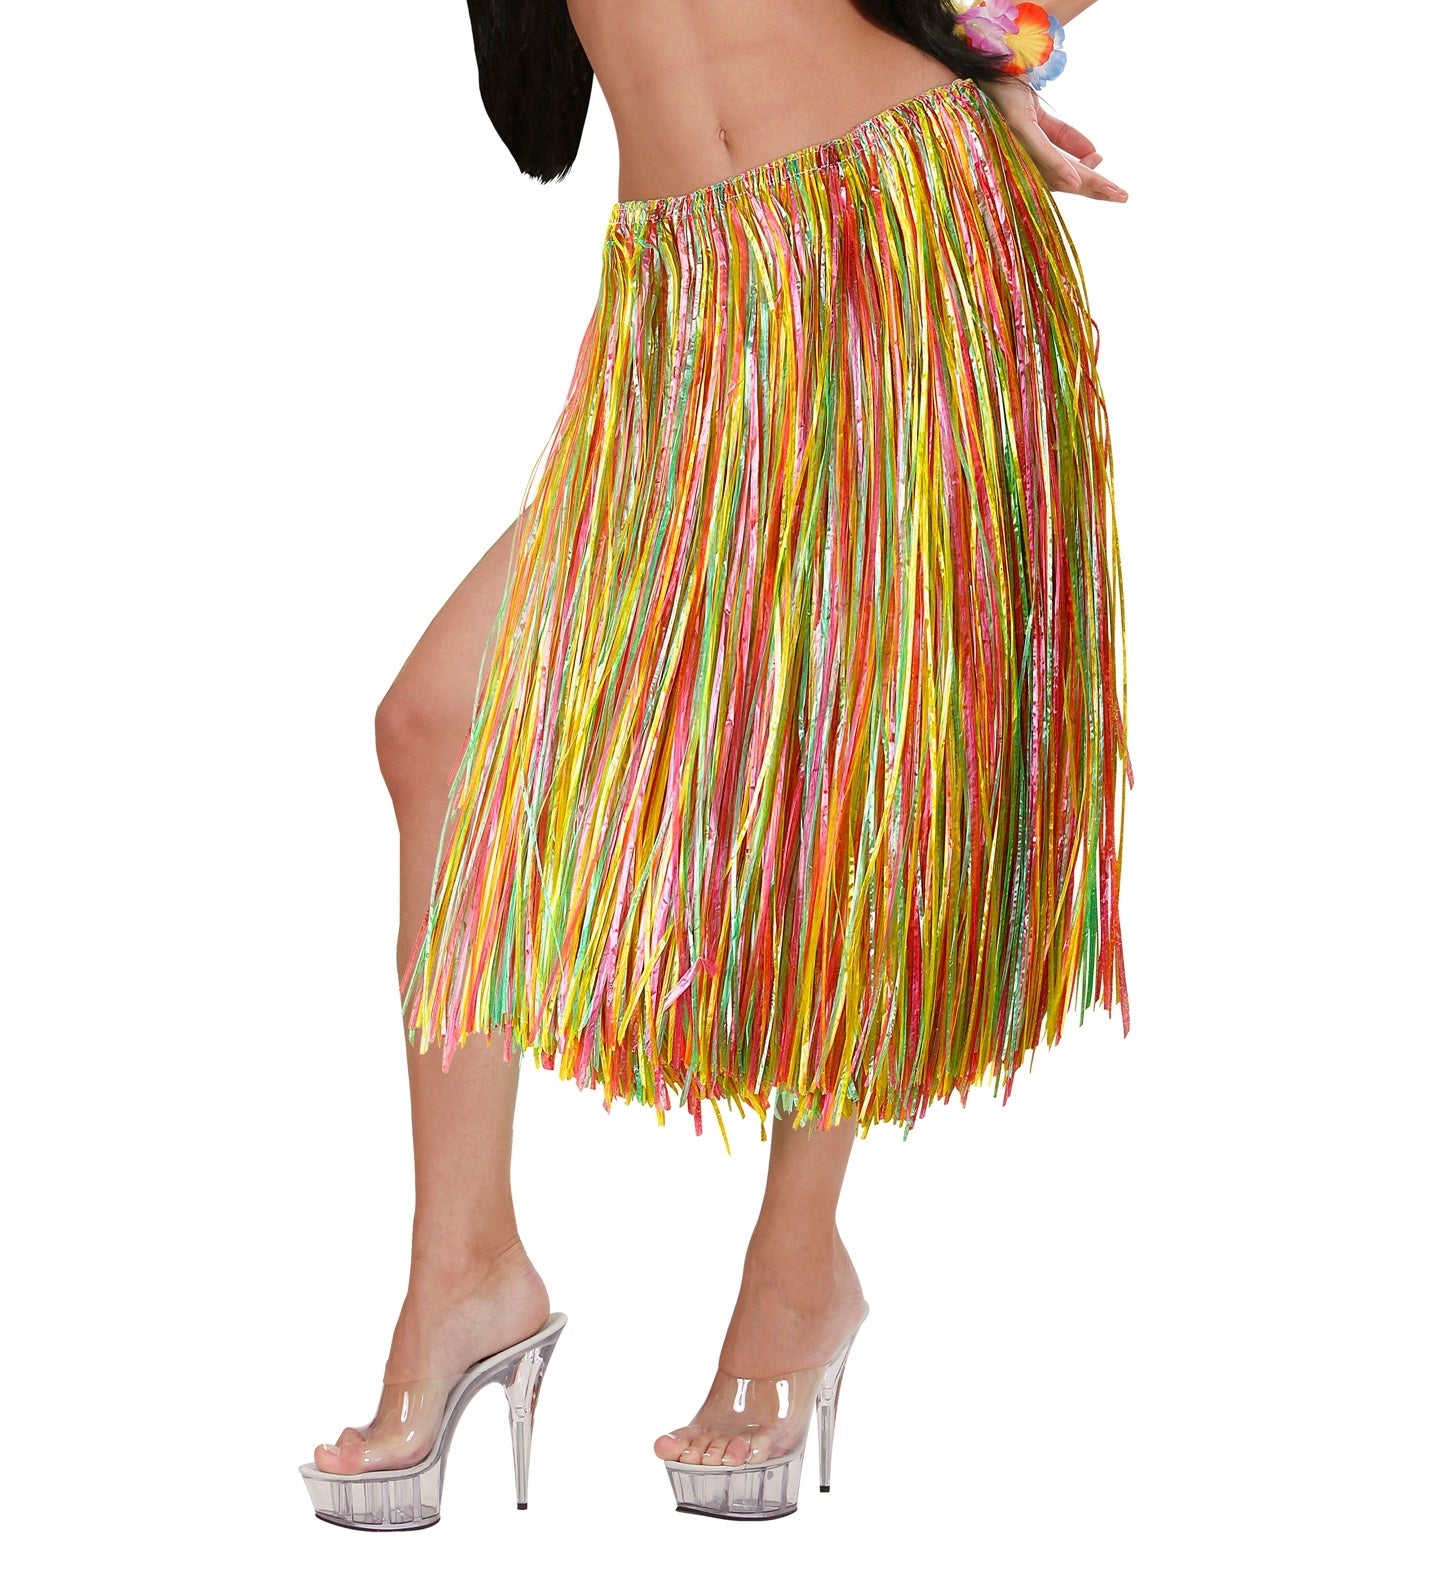 Widmann - Hawaii & Carribean & Tropisch Kostuum - Roselani Hawaiirok 75 Centimeter, Meerkleurig - multicolor - One Size - Carnavalskleding - Verkleedkleding